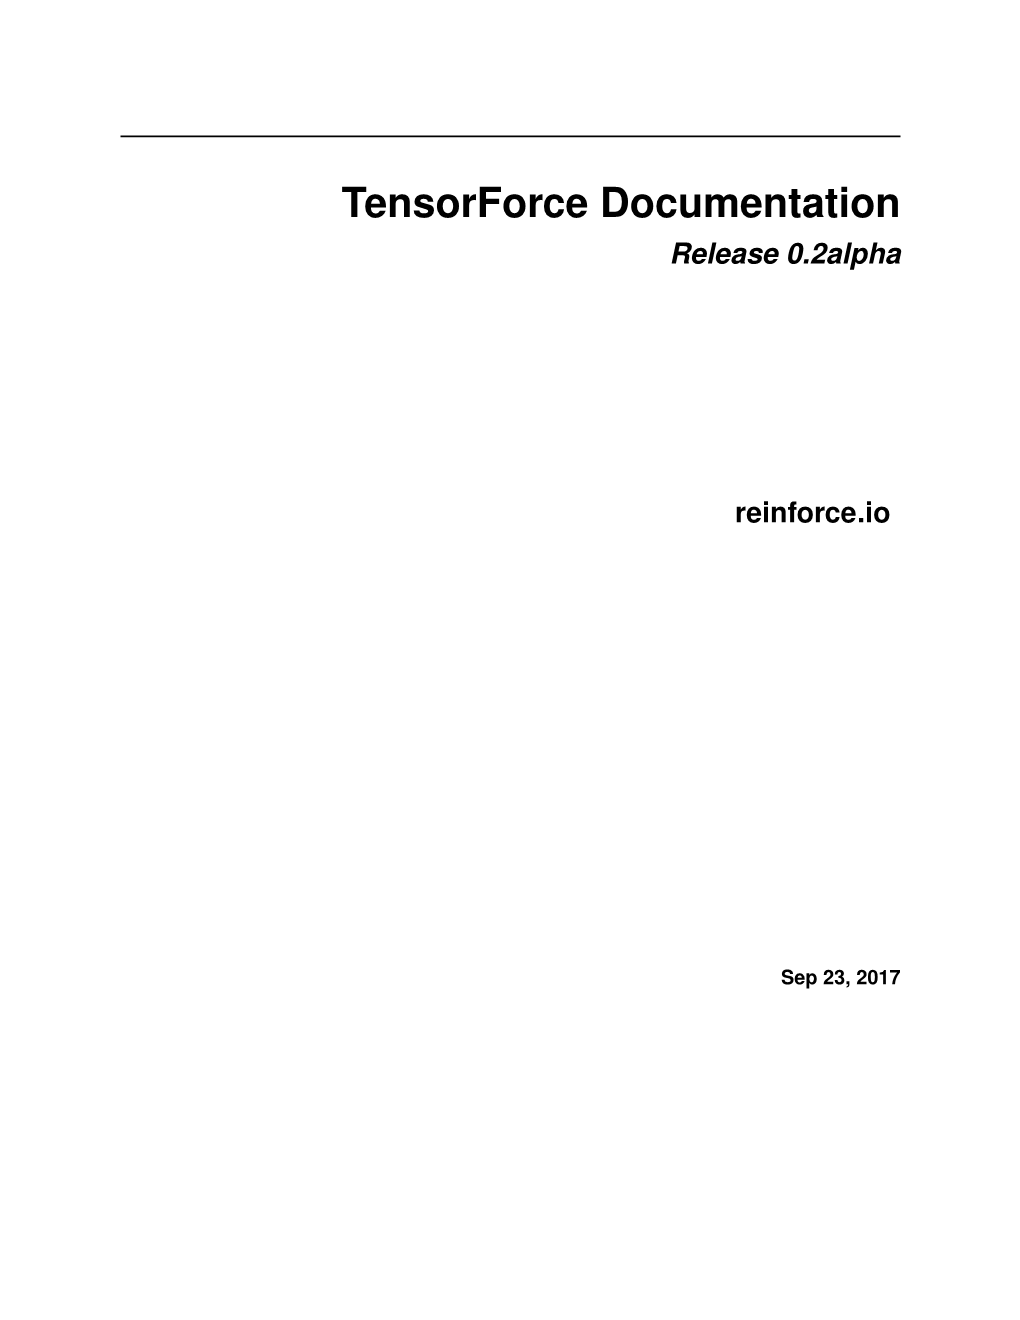 Tensorforce Documentation Release 0.2Alpha